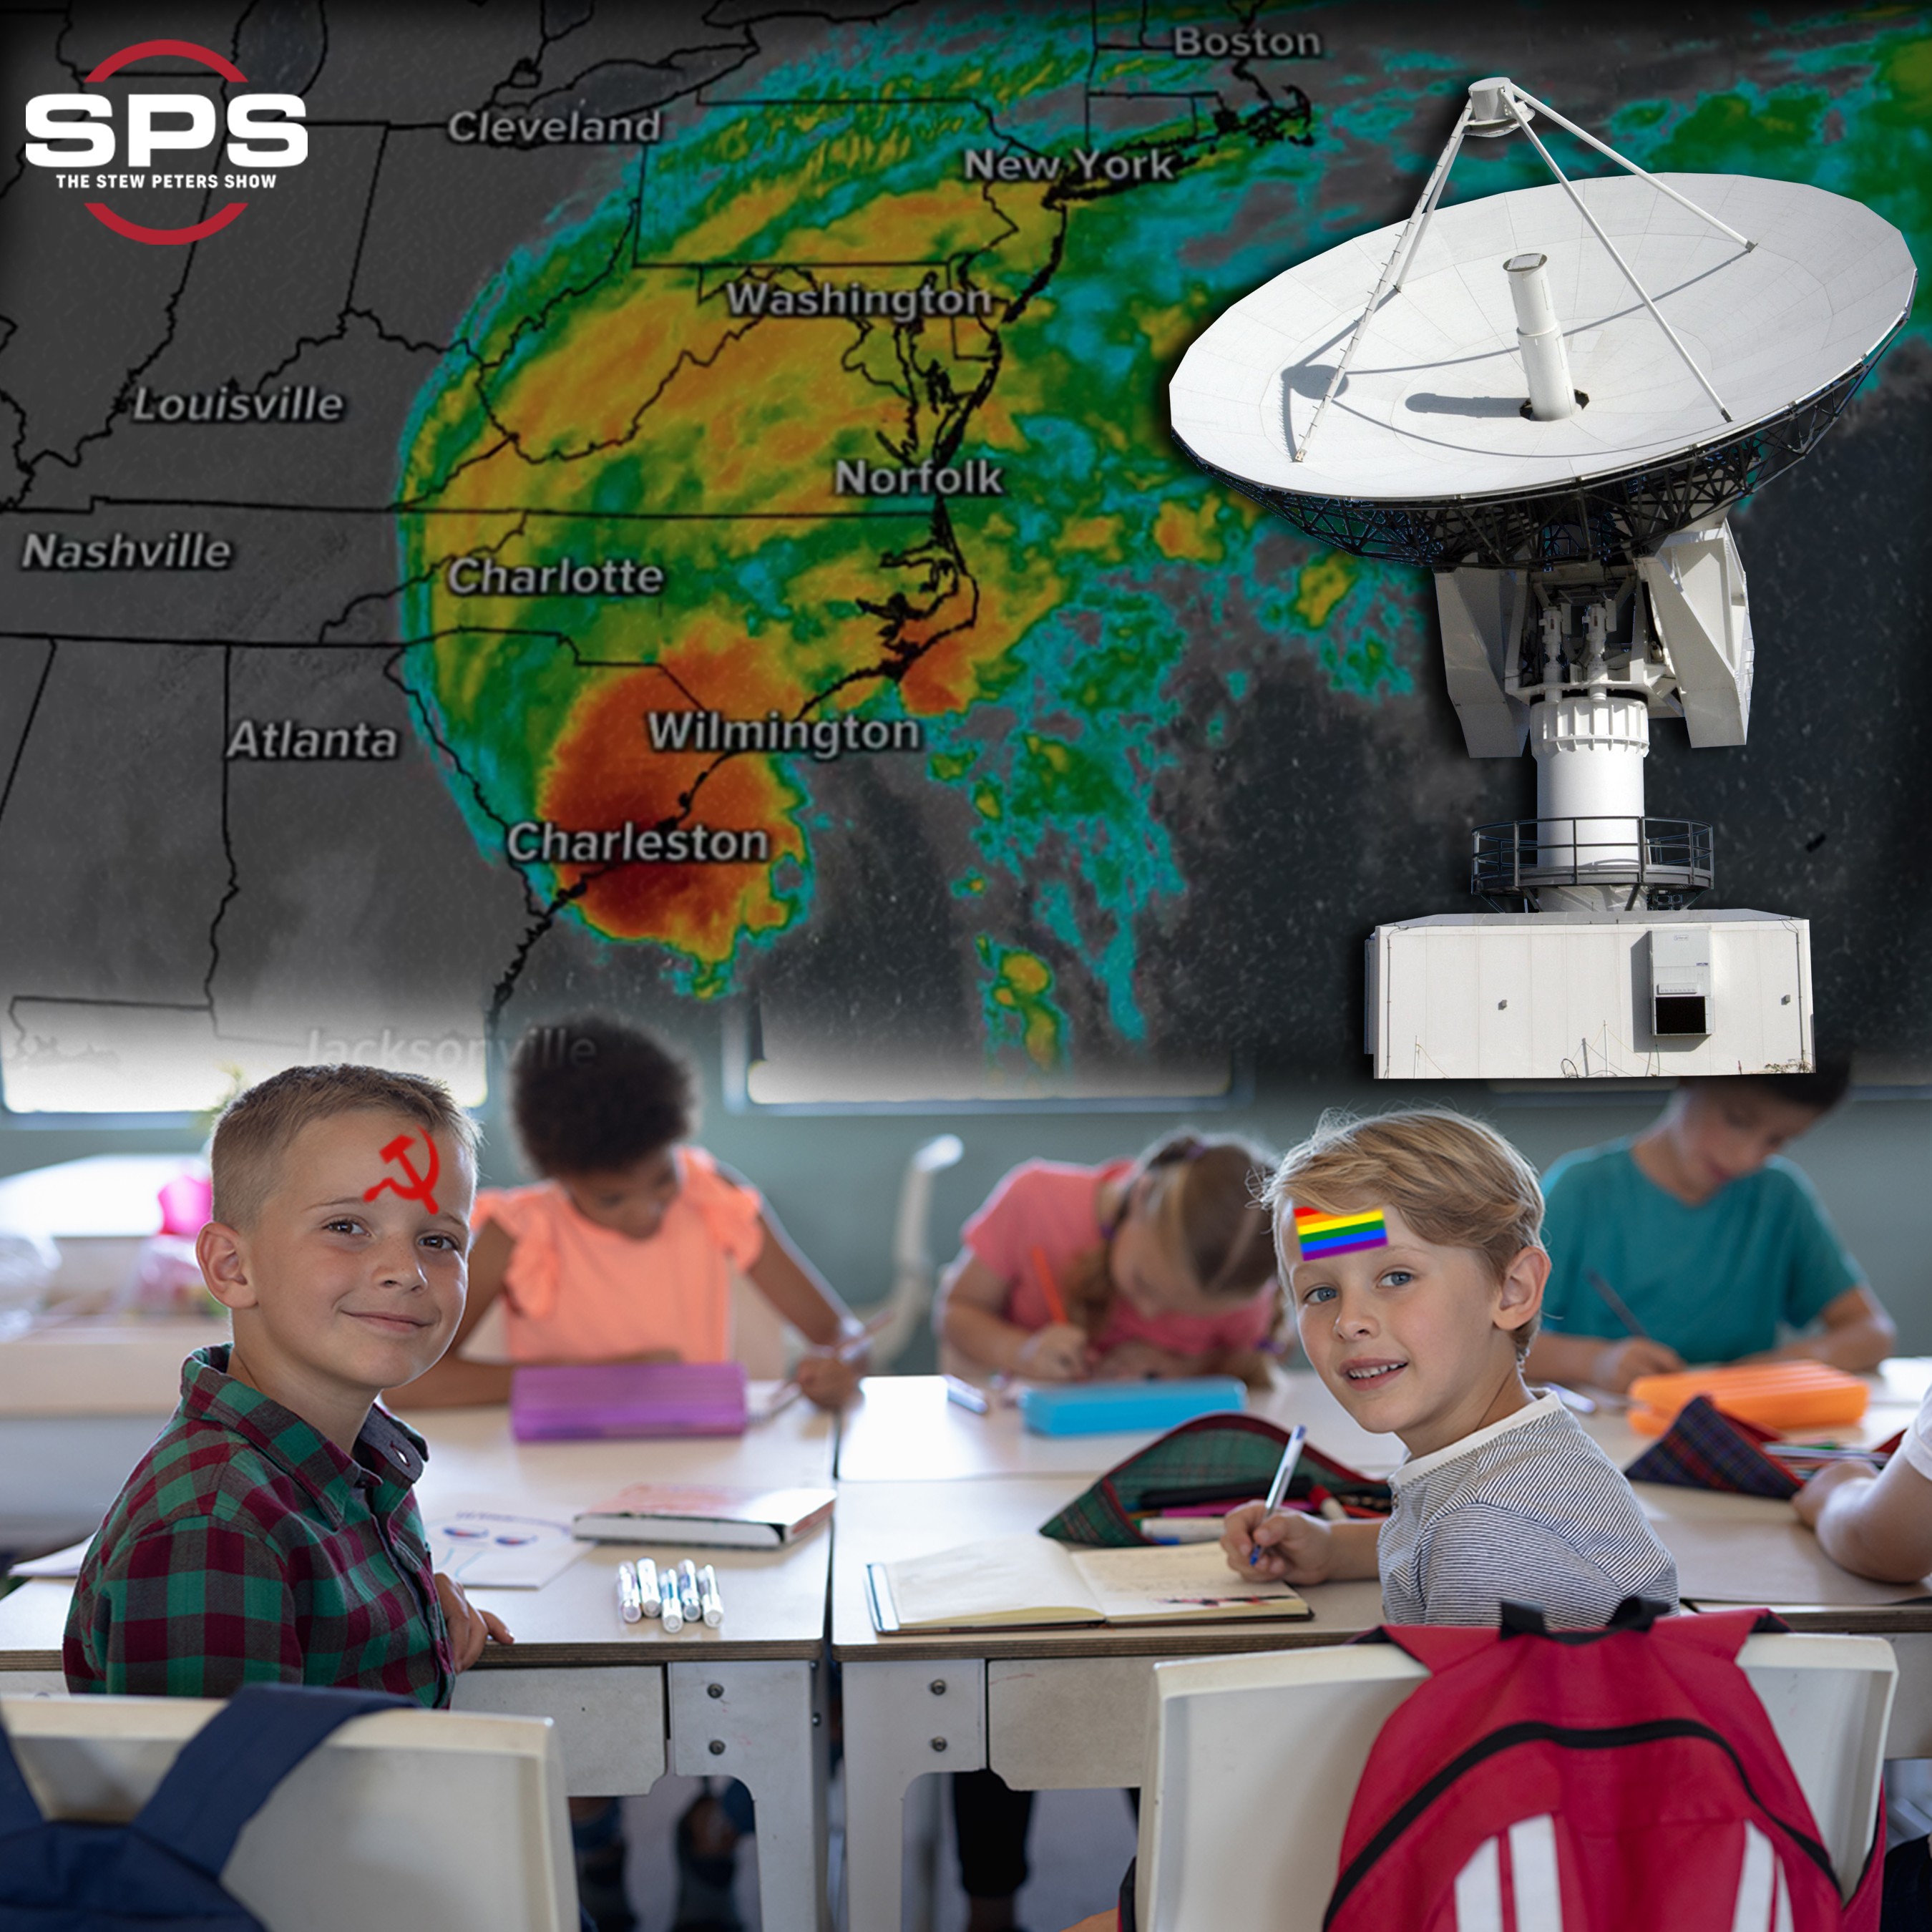 Weather WARFARE, Artificial Storms TERRORIZE Nations, COMMUNIST Plot To BRAINWASH Kids